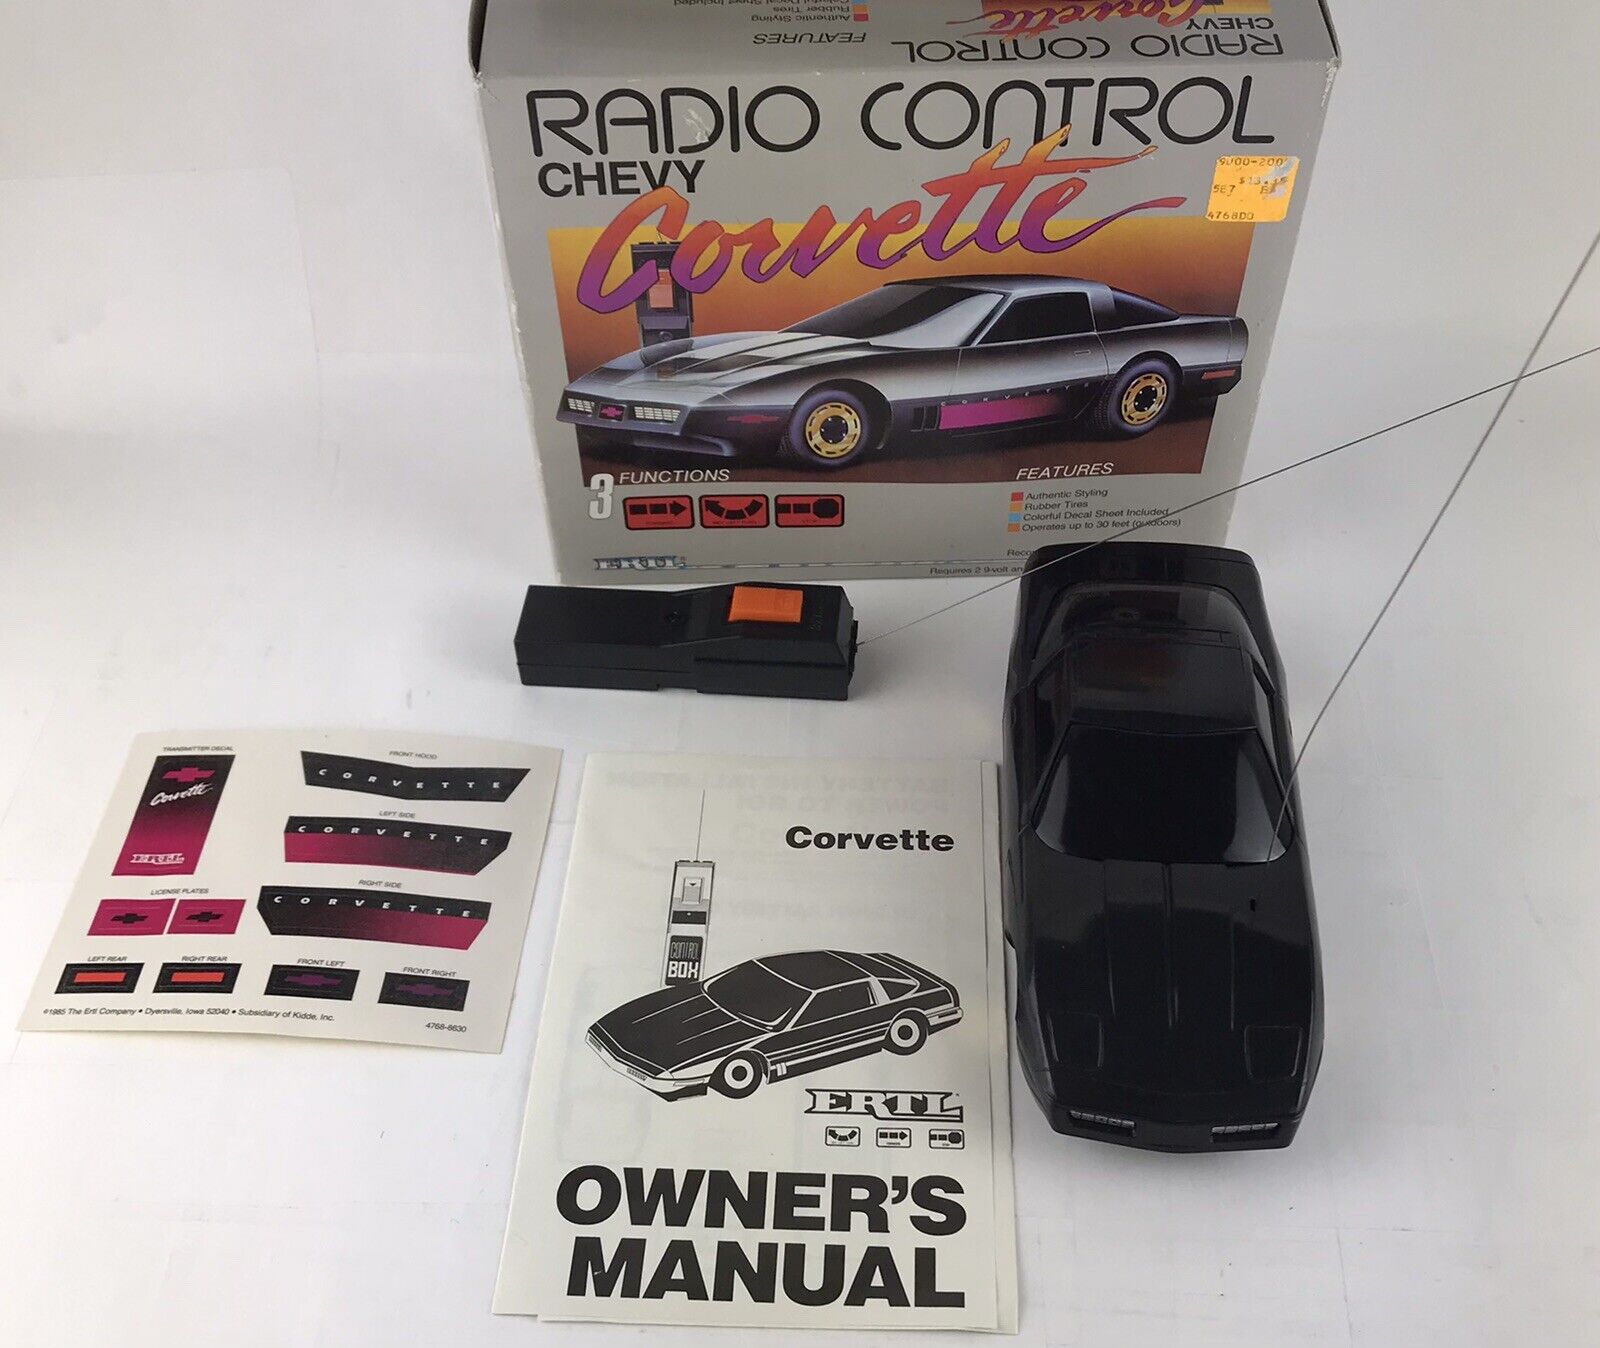 Ertl Radio Control Chevy Corvette Vintage 1980’s RARE